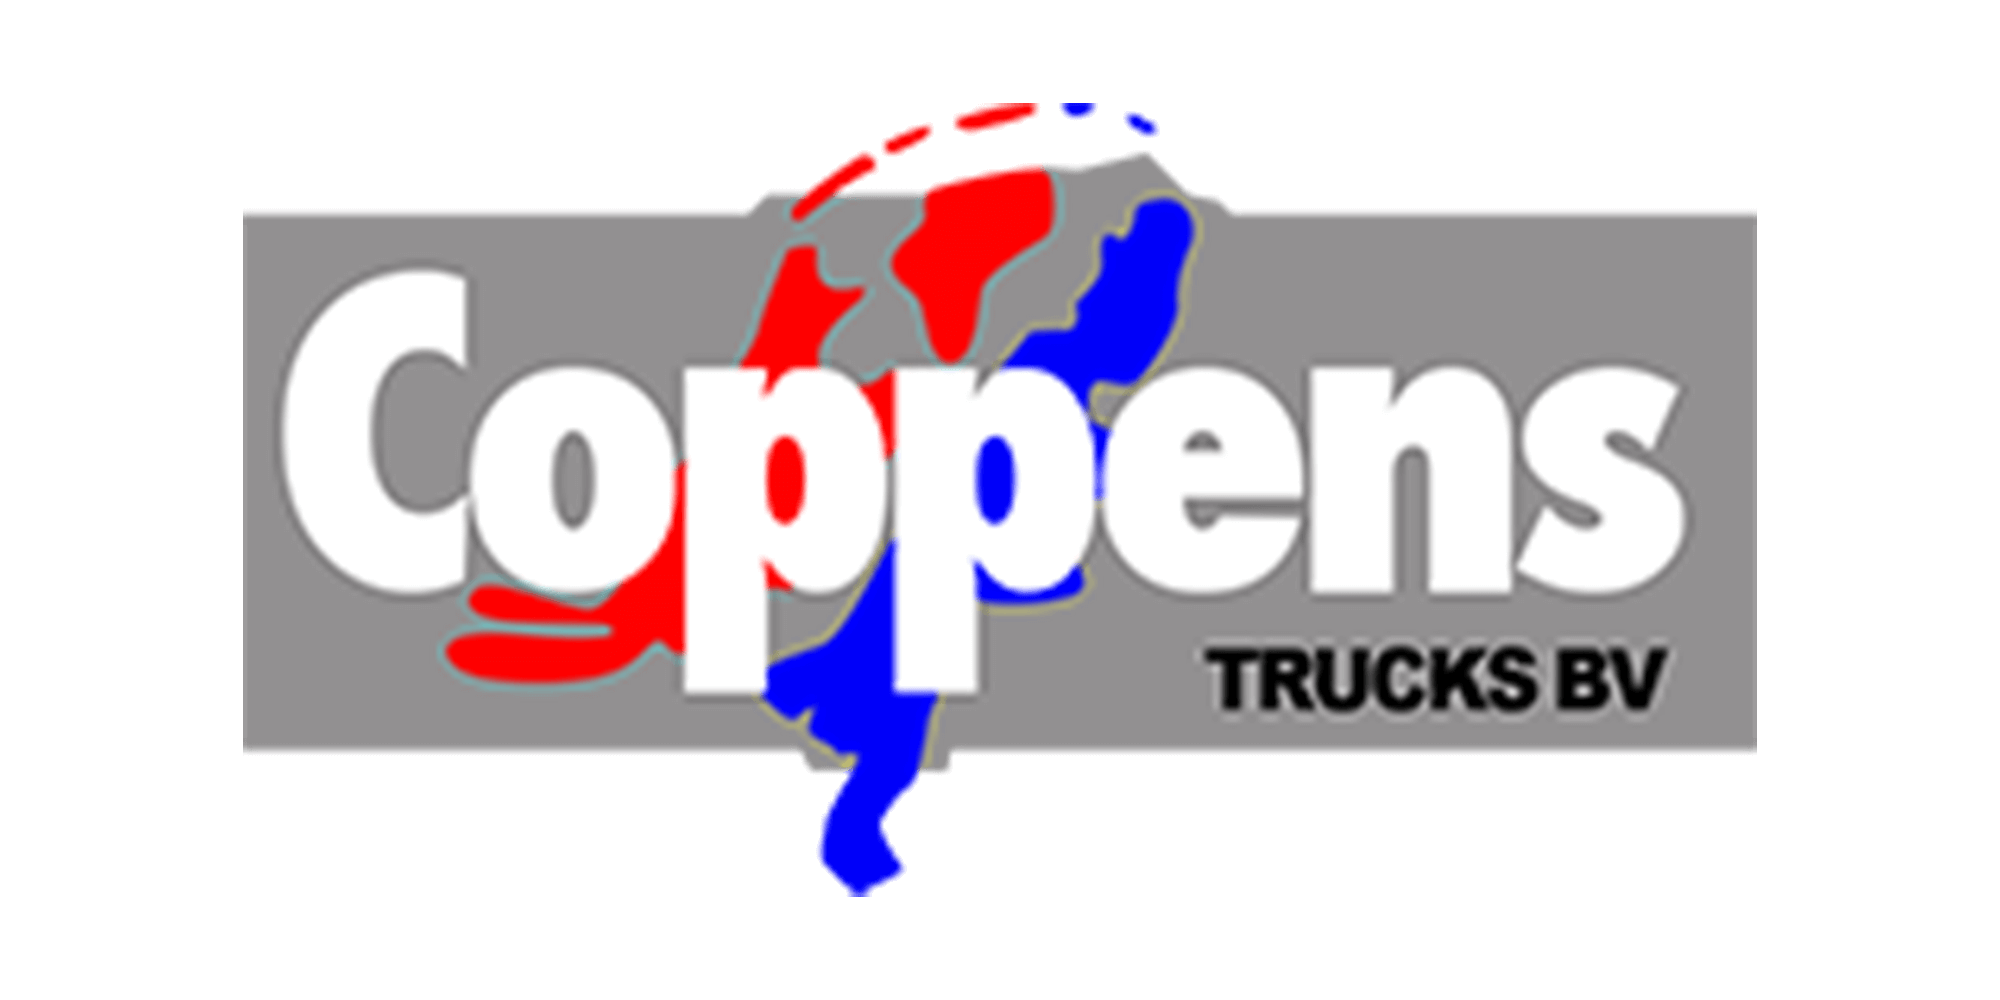 Coppens Trucks BV